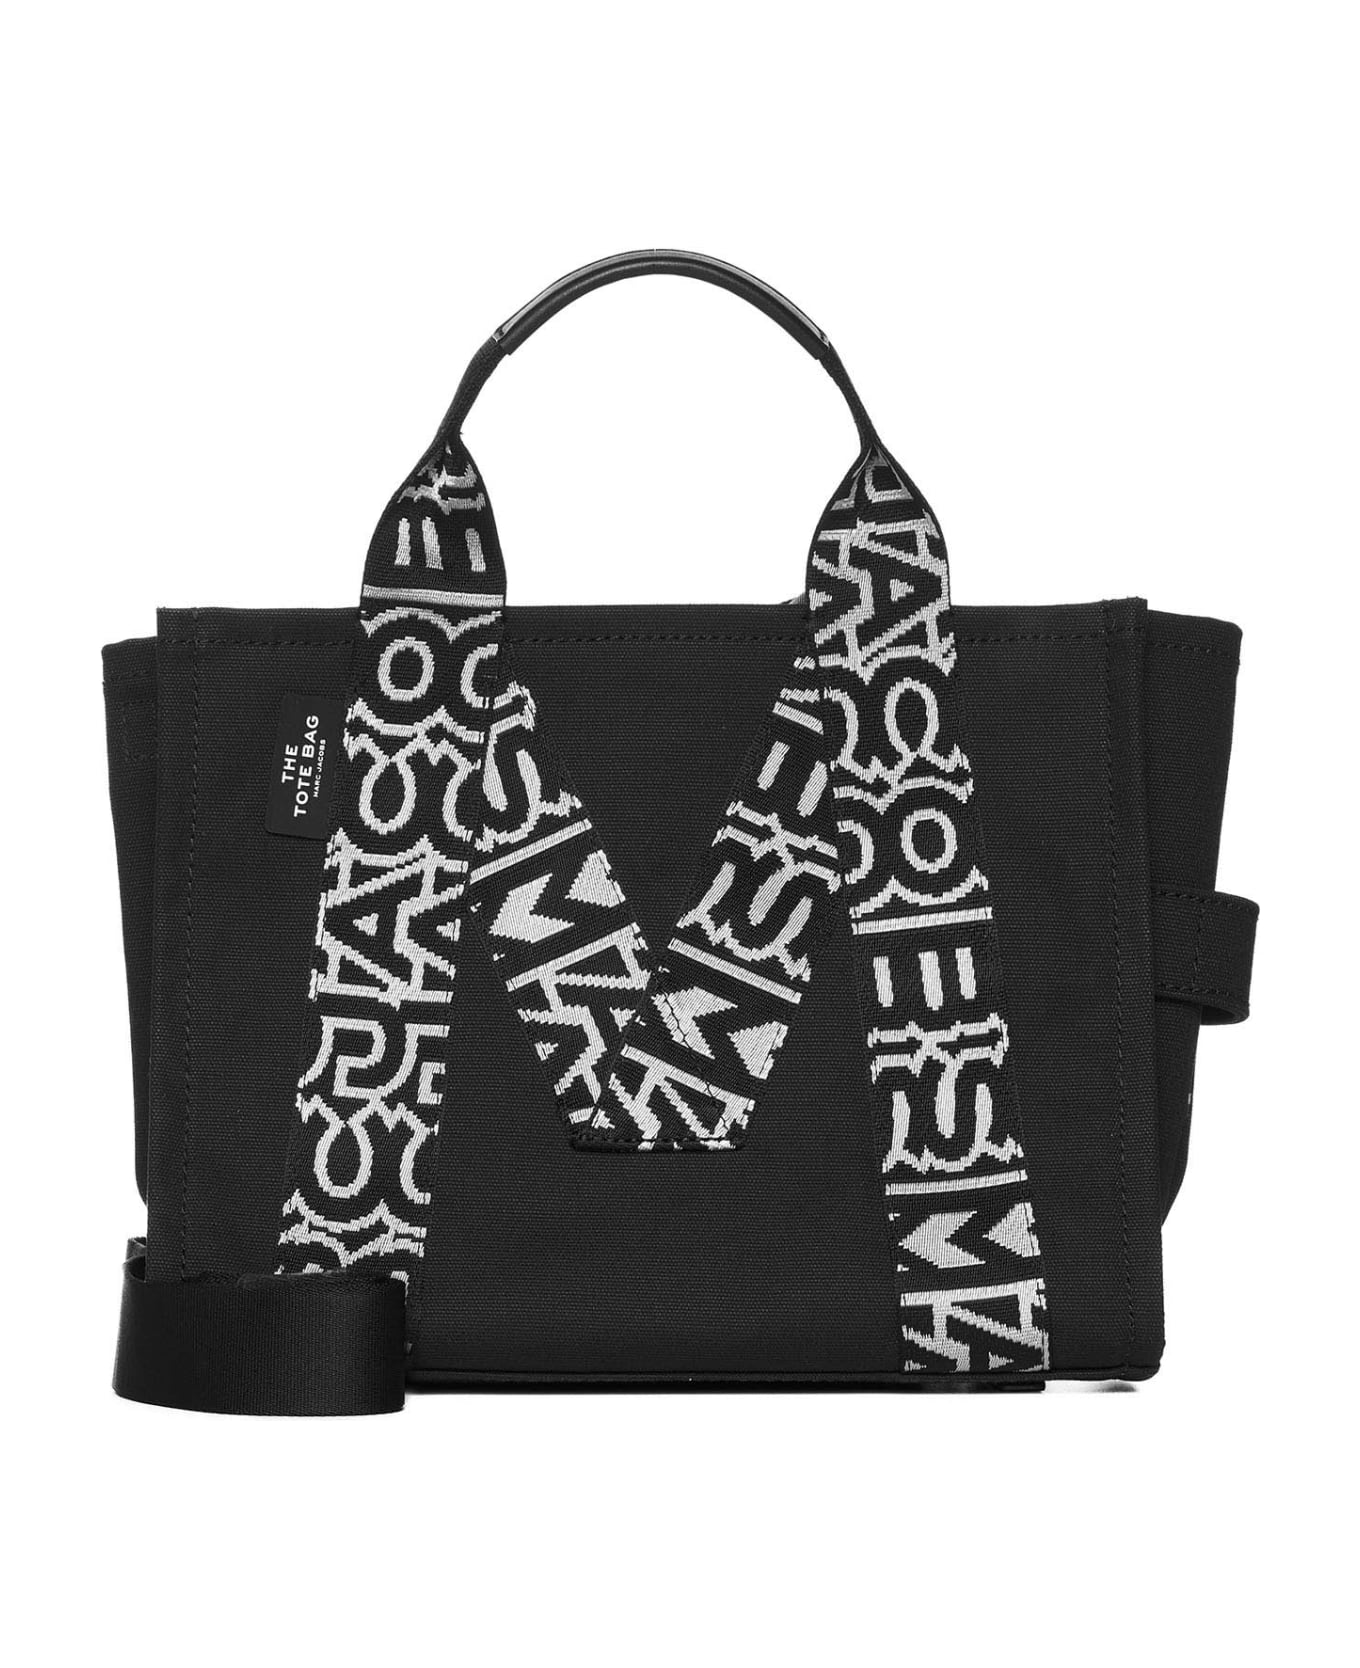 Marc Jacobs The M Medium Tote Bag - Black/White